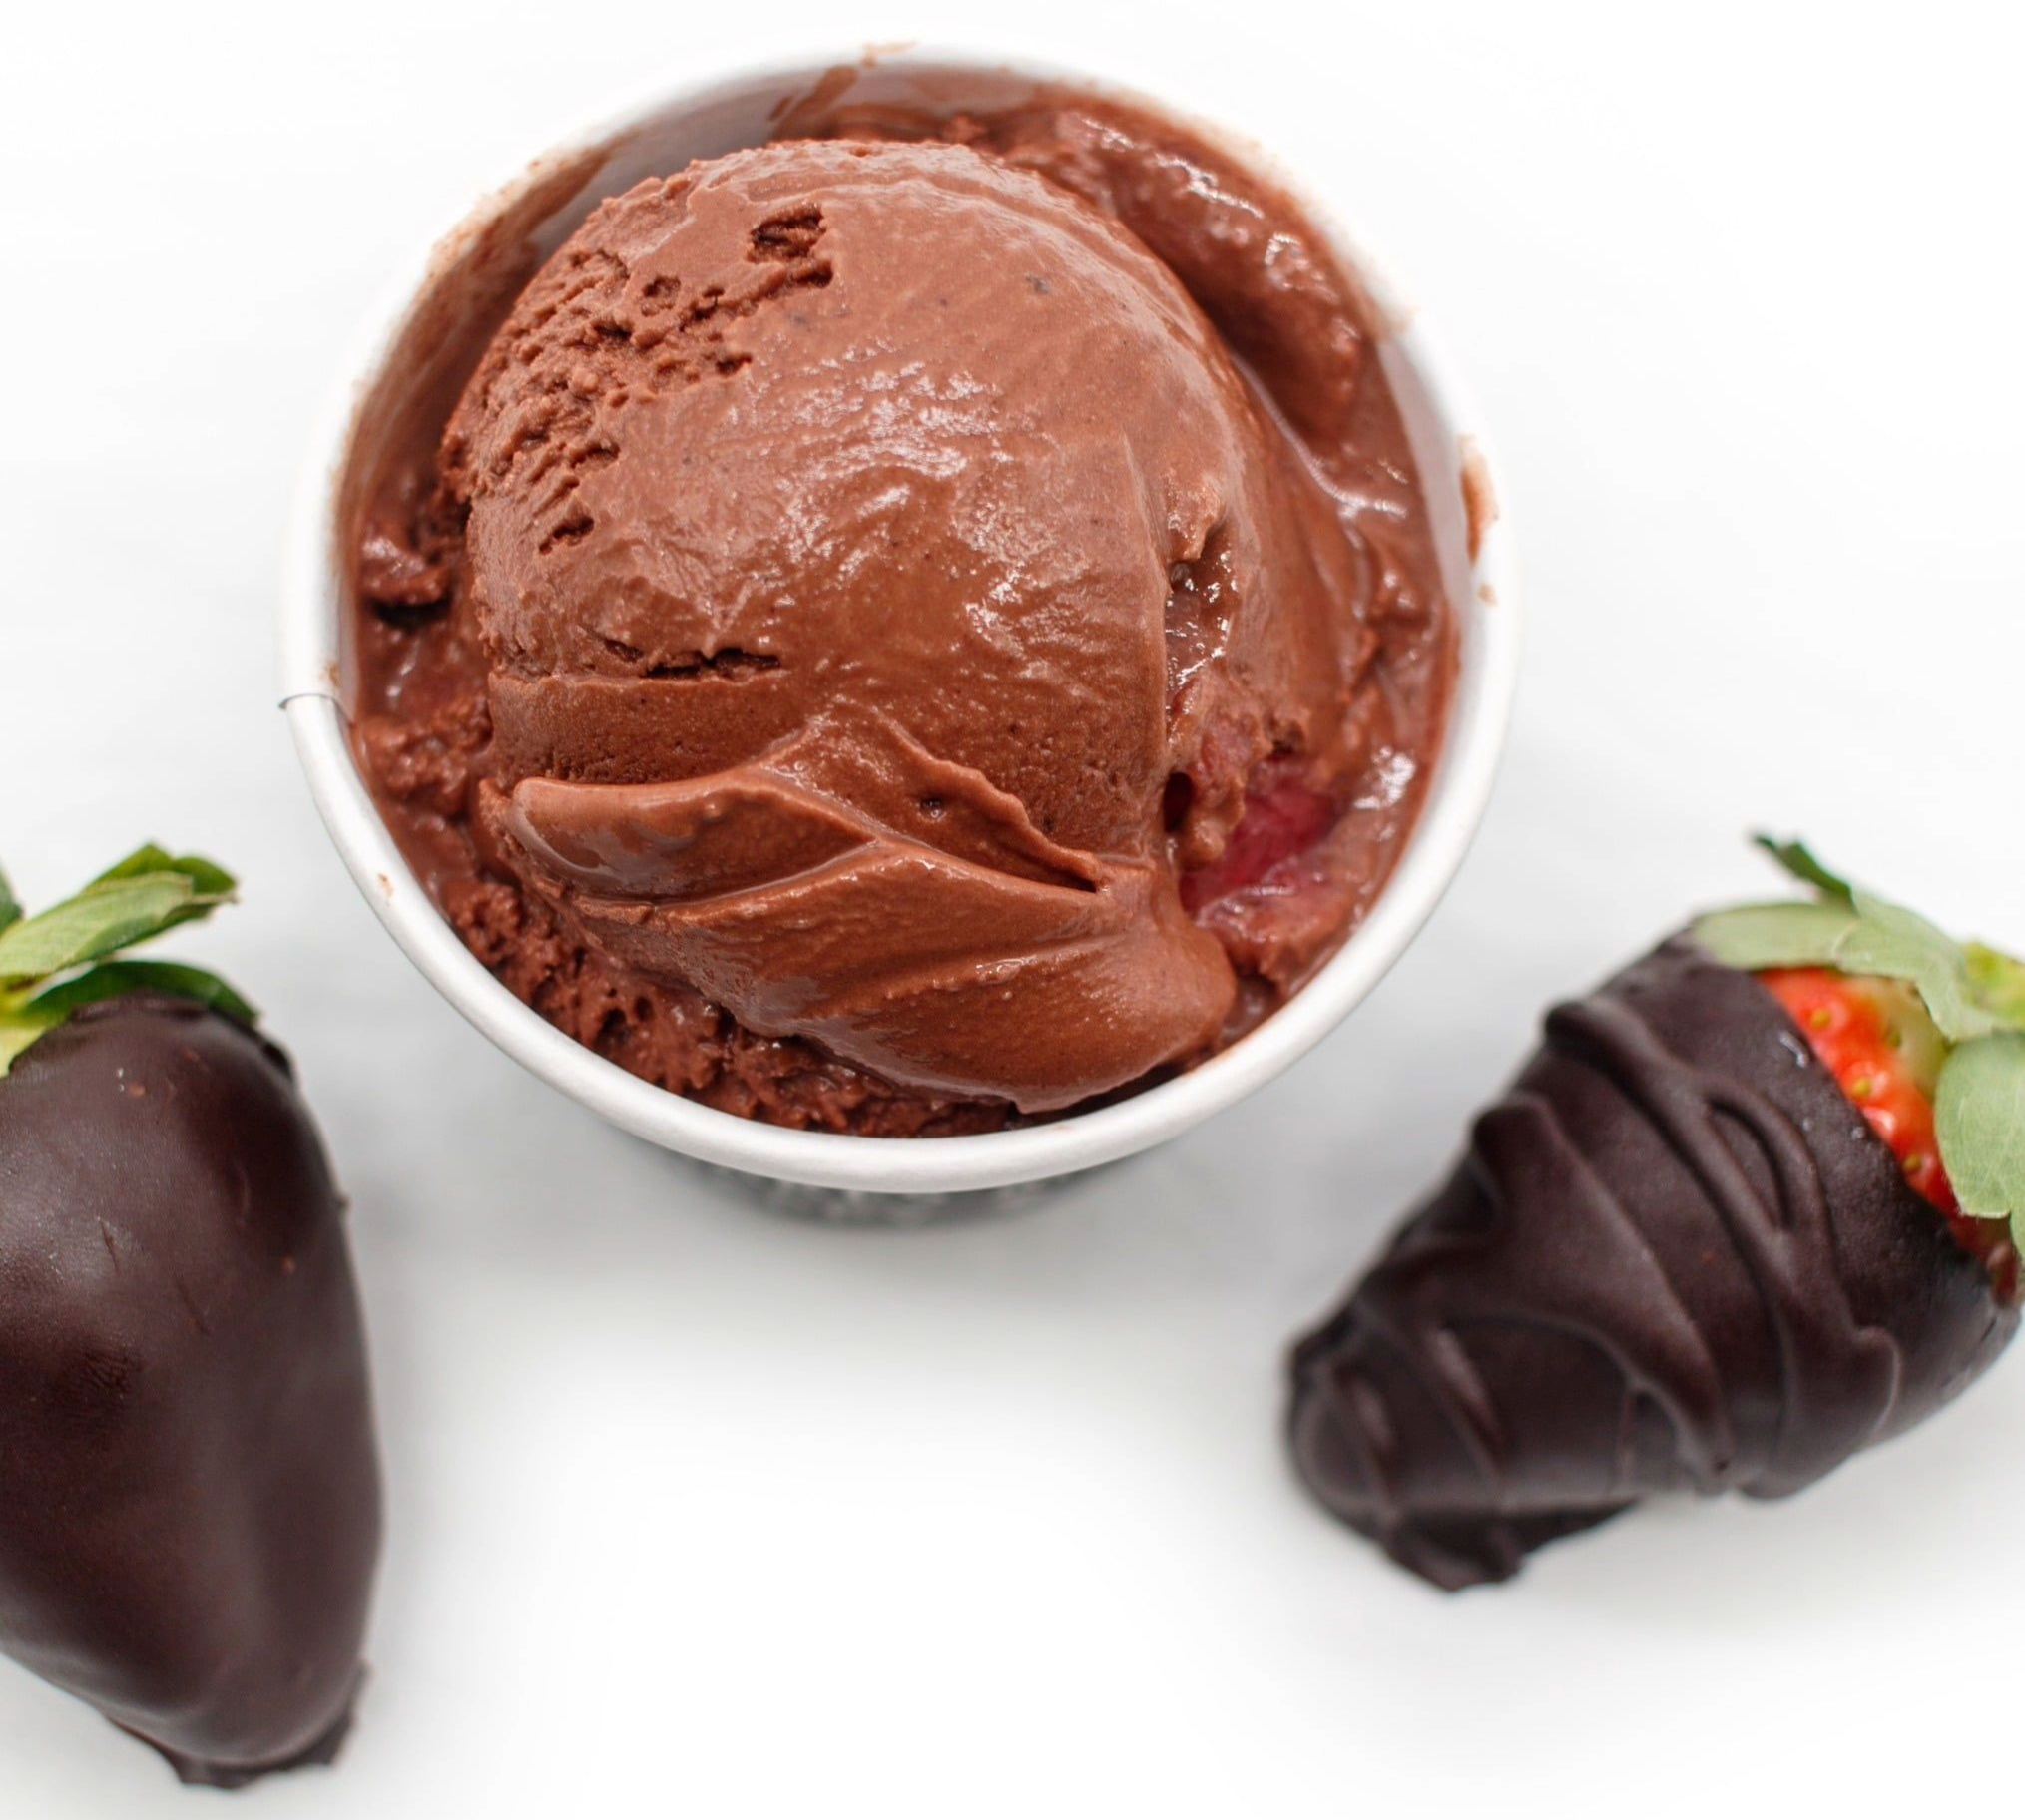 Hattie Jane's Creamery ice cream and chocolate covered strawberries Nashville